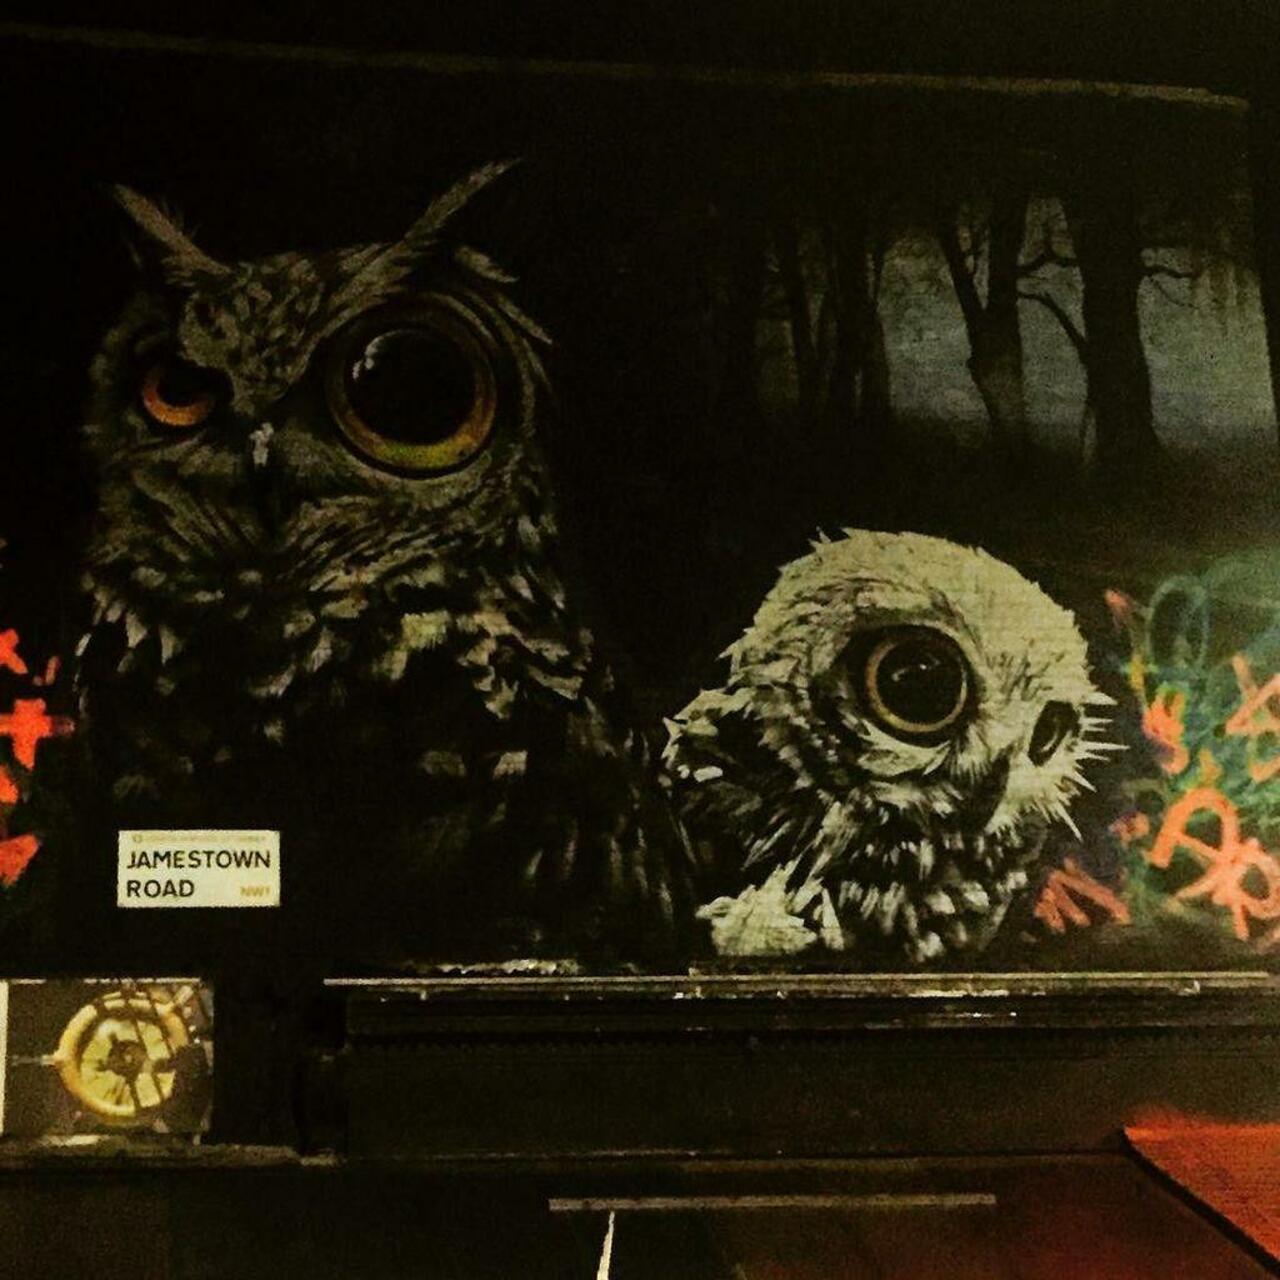 The more it sees the less it talks #owls #graffitiwall #graffiti #streetart #streetartlondon #camden #london by bam… http://t.co/DWOOE8fTMg